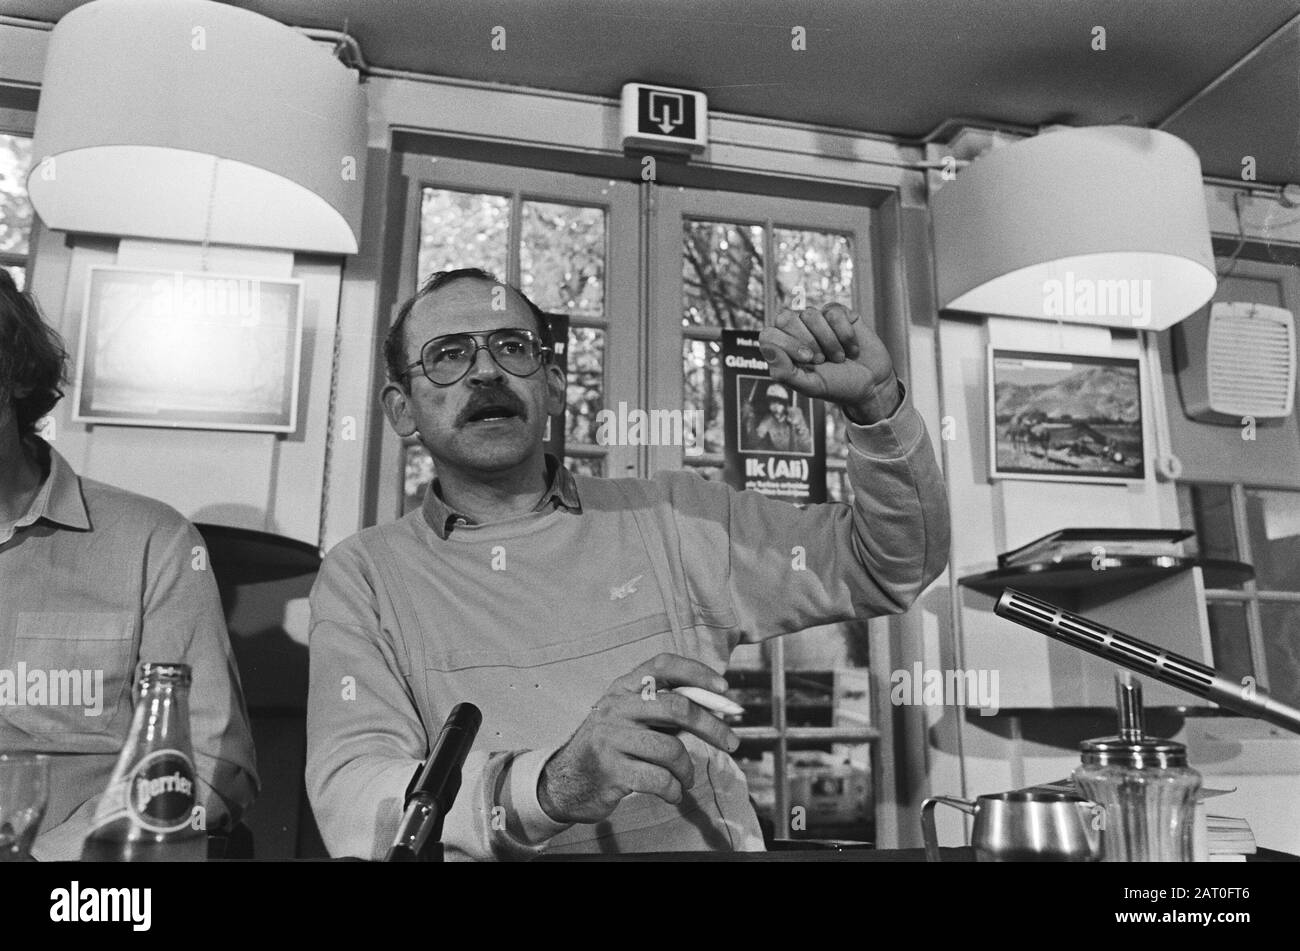 L'écrivain allemand Günter Wallraff à Amsterdam concernant la traduction  Ganz Unten; Günter Wallraff lors de la conférence de presse (l'éditeur  gauche Rob van Gennep Date: 8 novembre 1985 lieu: Amsterdam, Noord- Holland